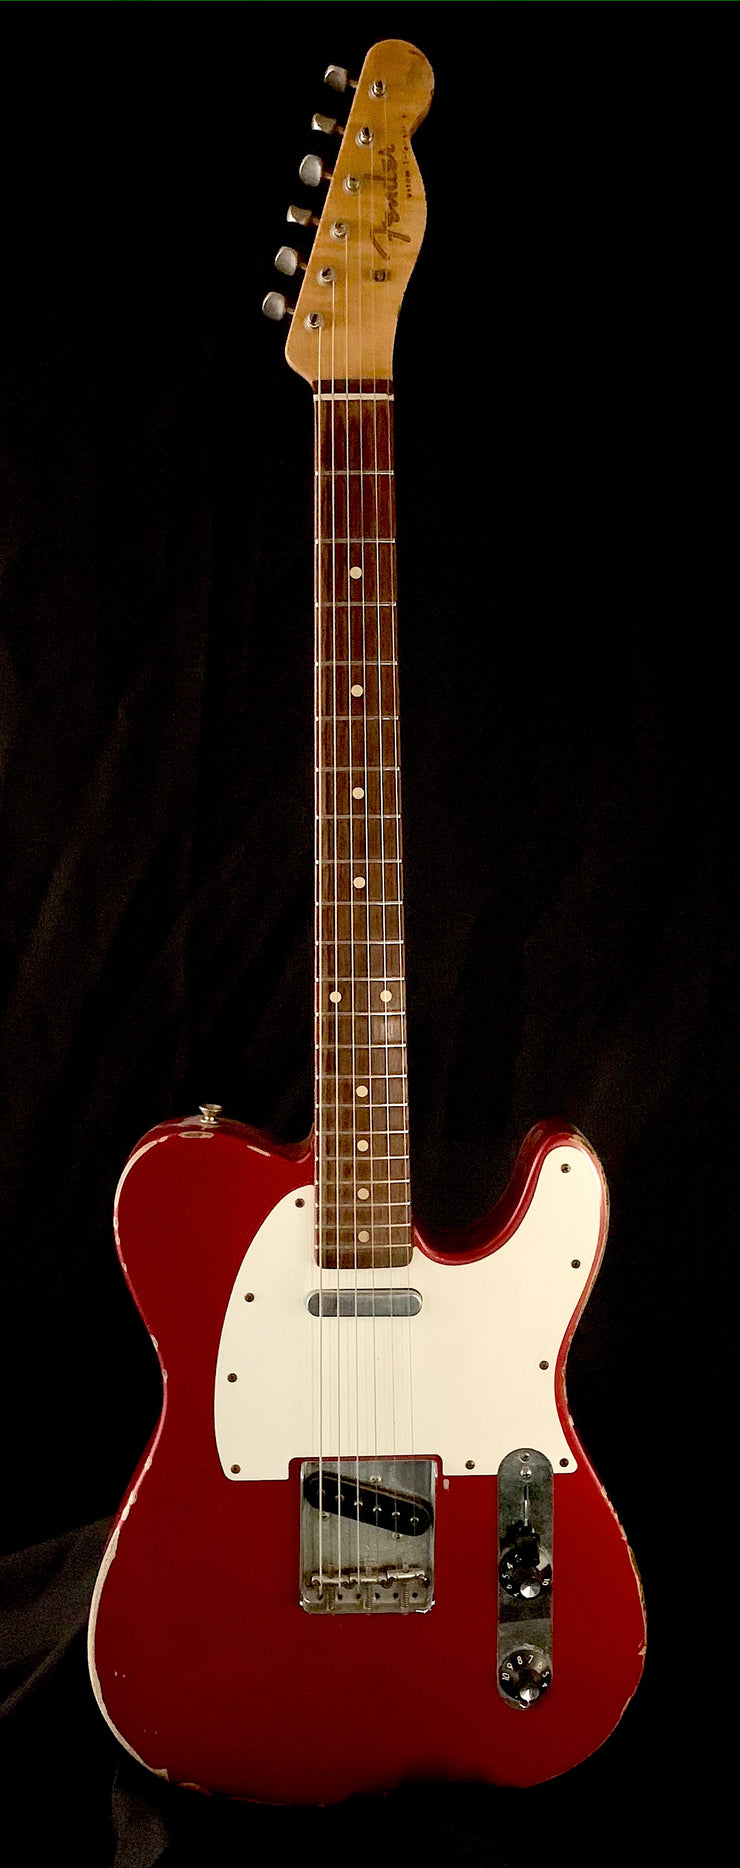 Fender Custom Shop " Muddy Waters" Telecaster